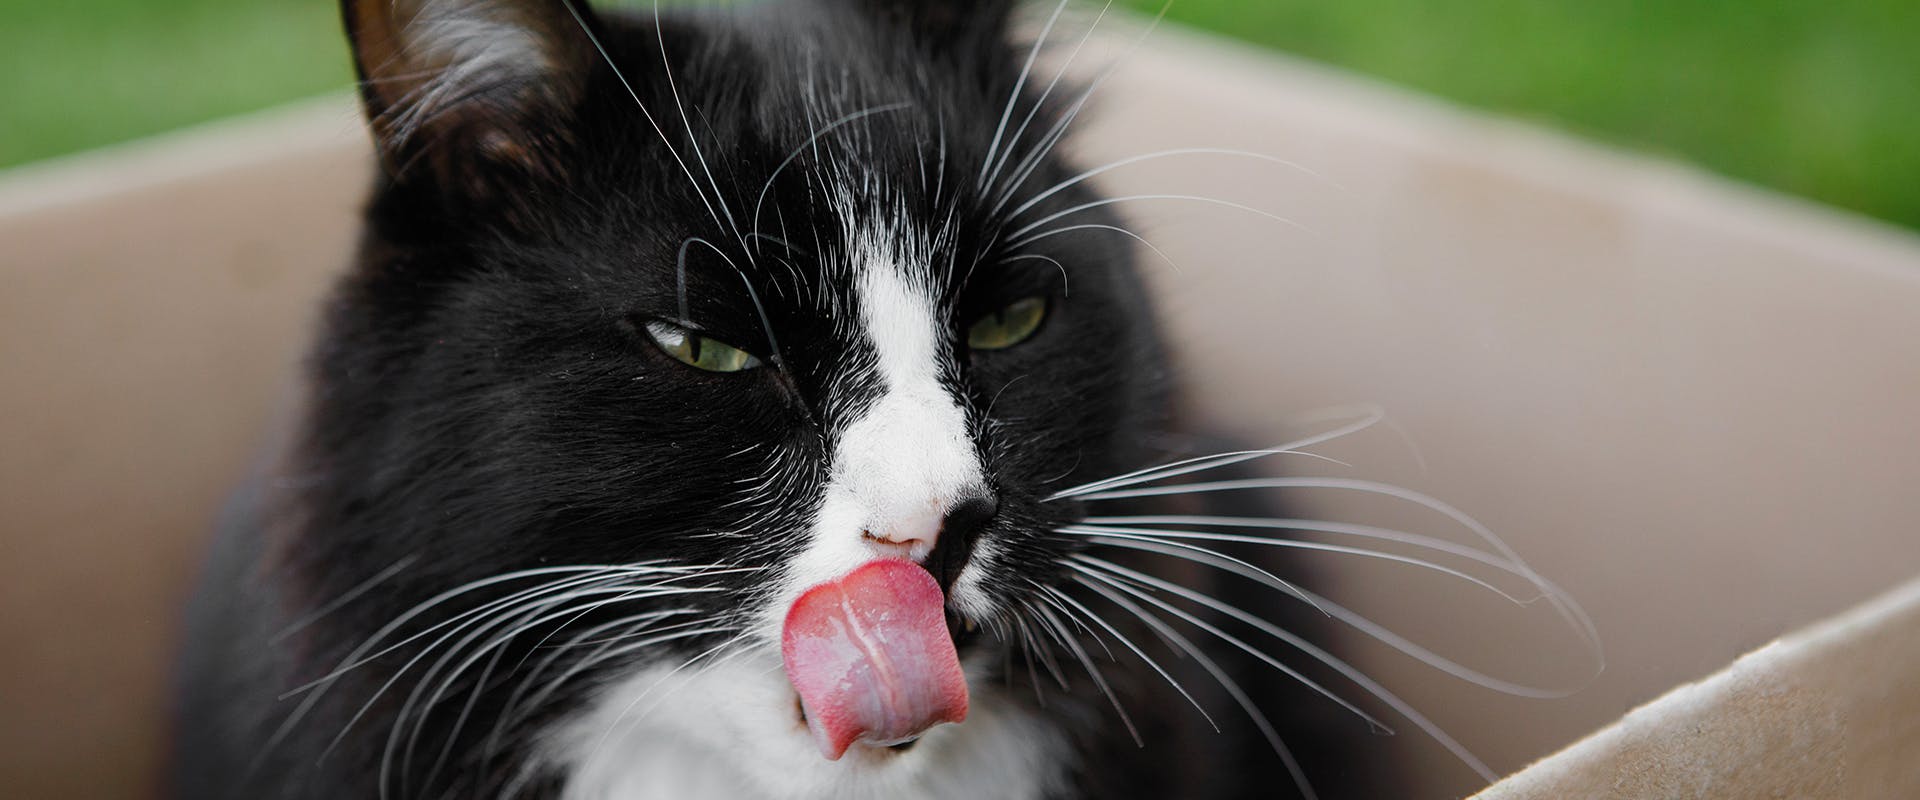 Tuxedo cat names - a black and white Tuxedo cat licking his lips